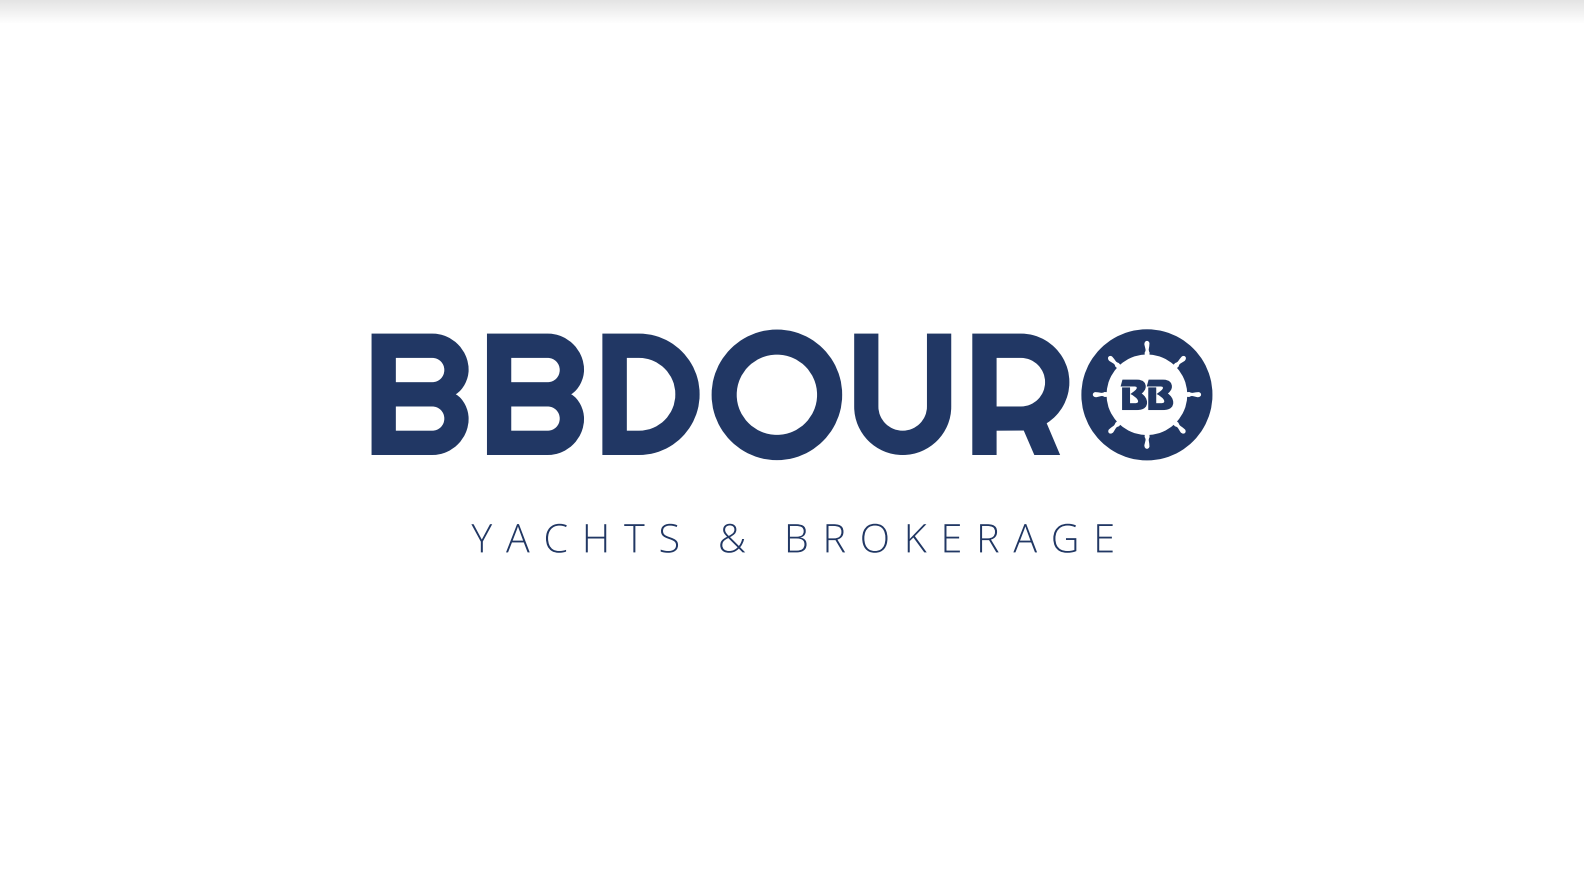 BBDouro Yachts and Brokerage